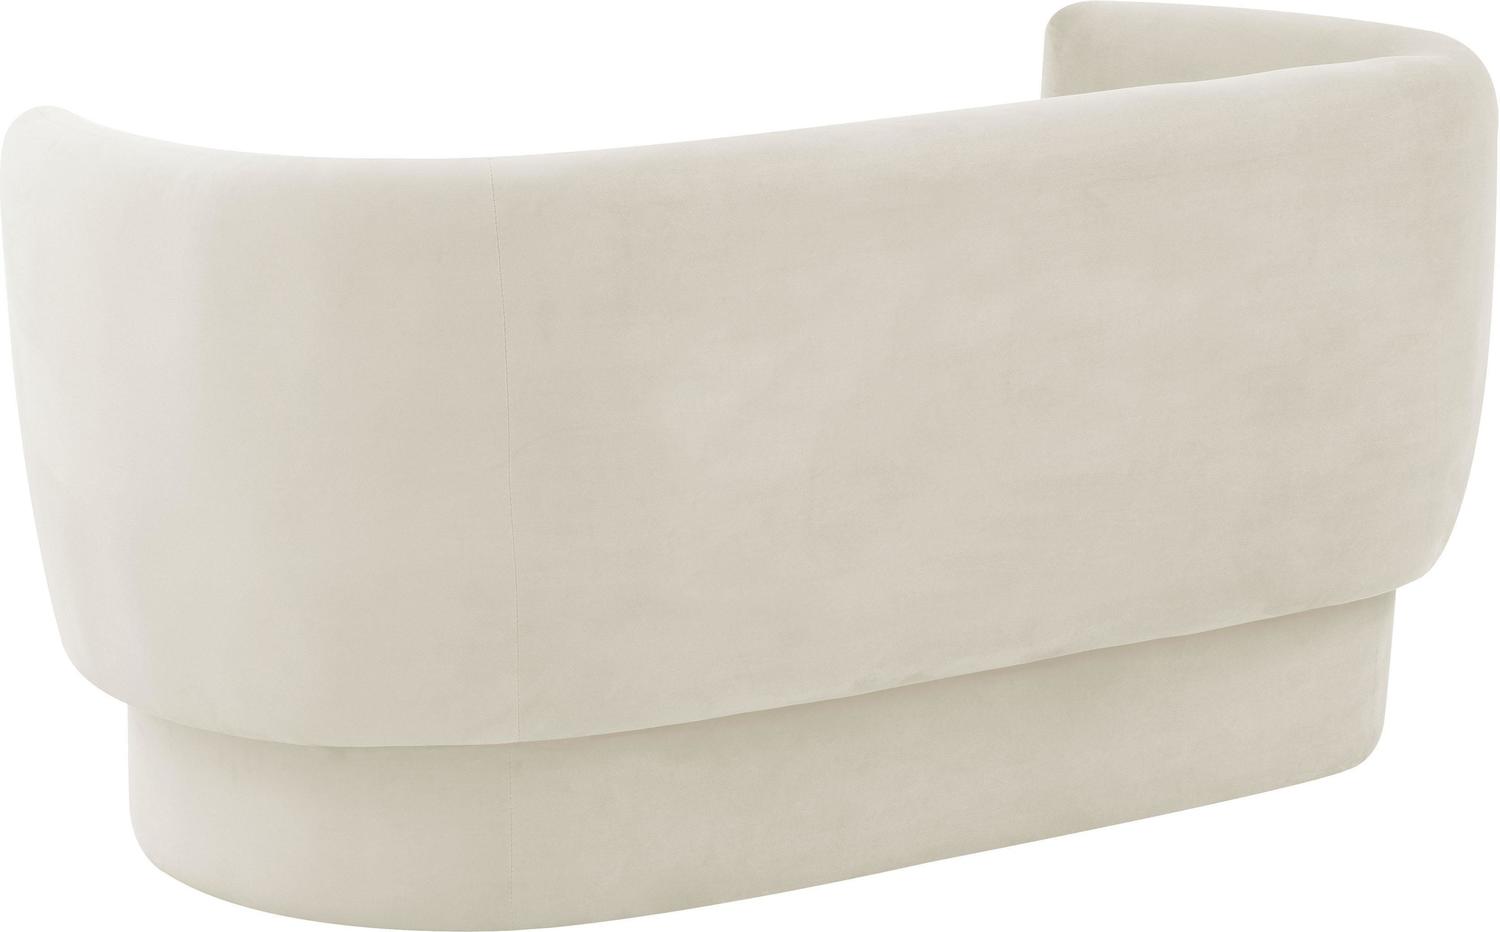 costco sectional sleeper Tov Furniture Loveseats Cream